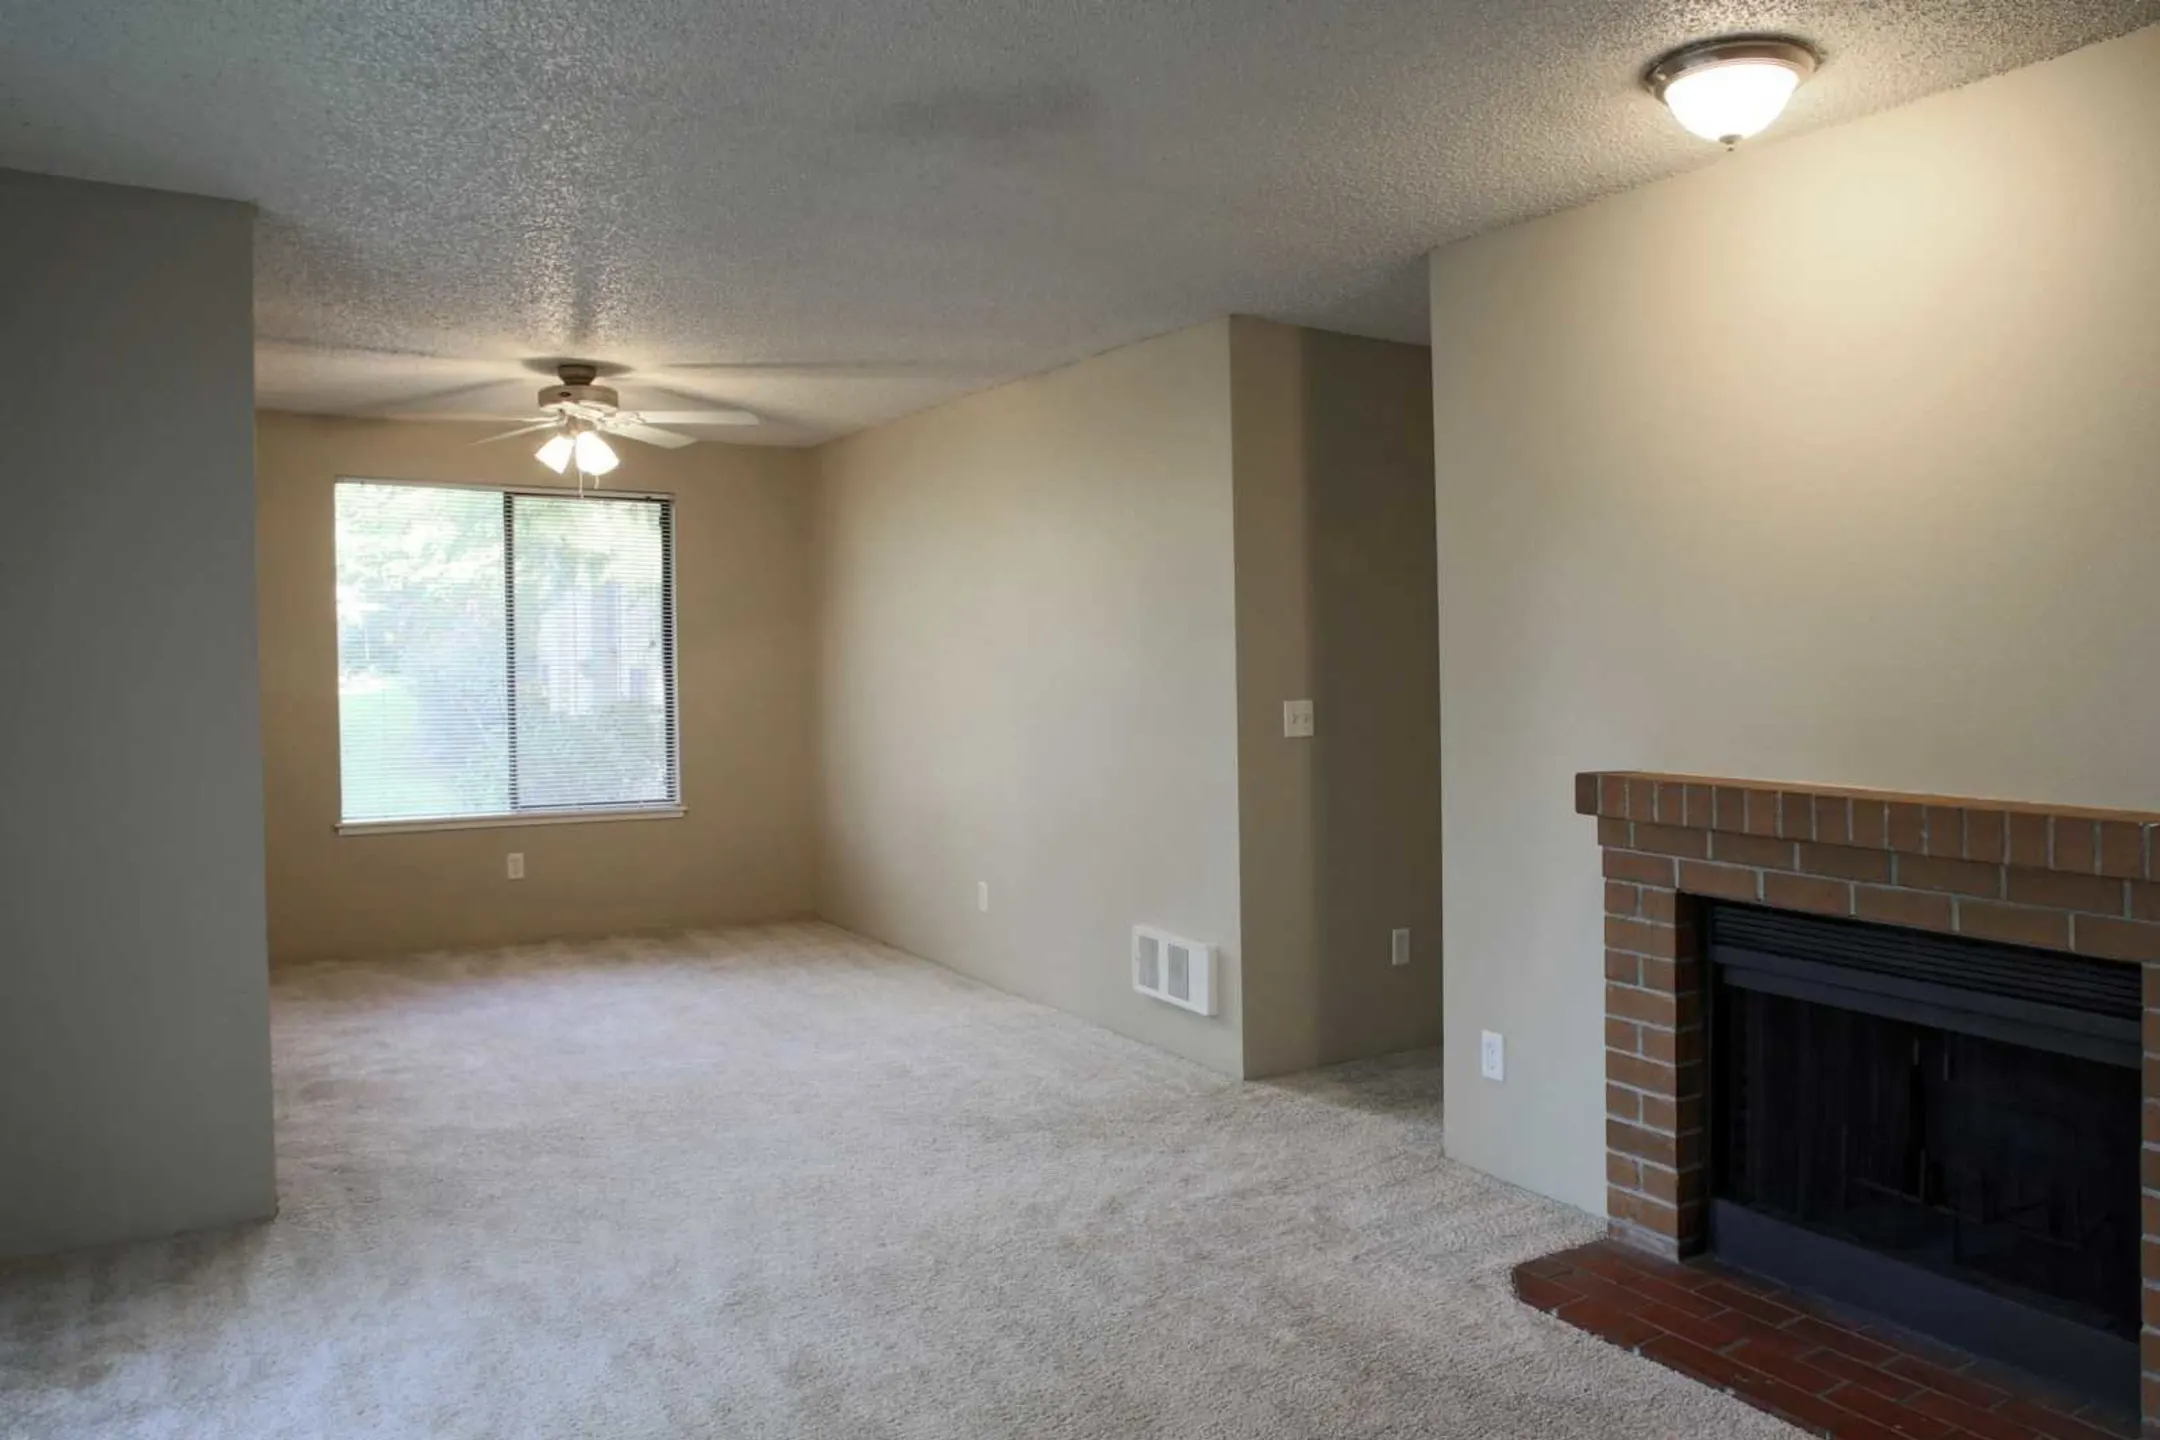 Living Room - Copper Ridge - Renton, WA